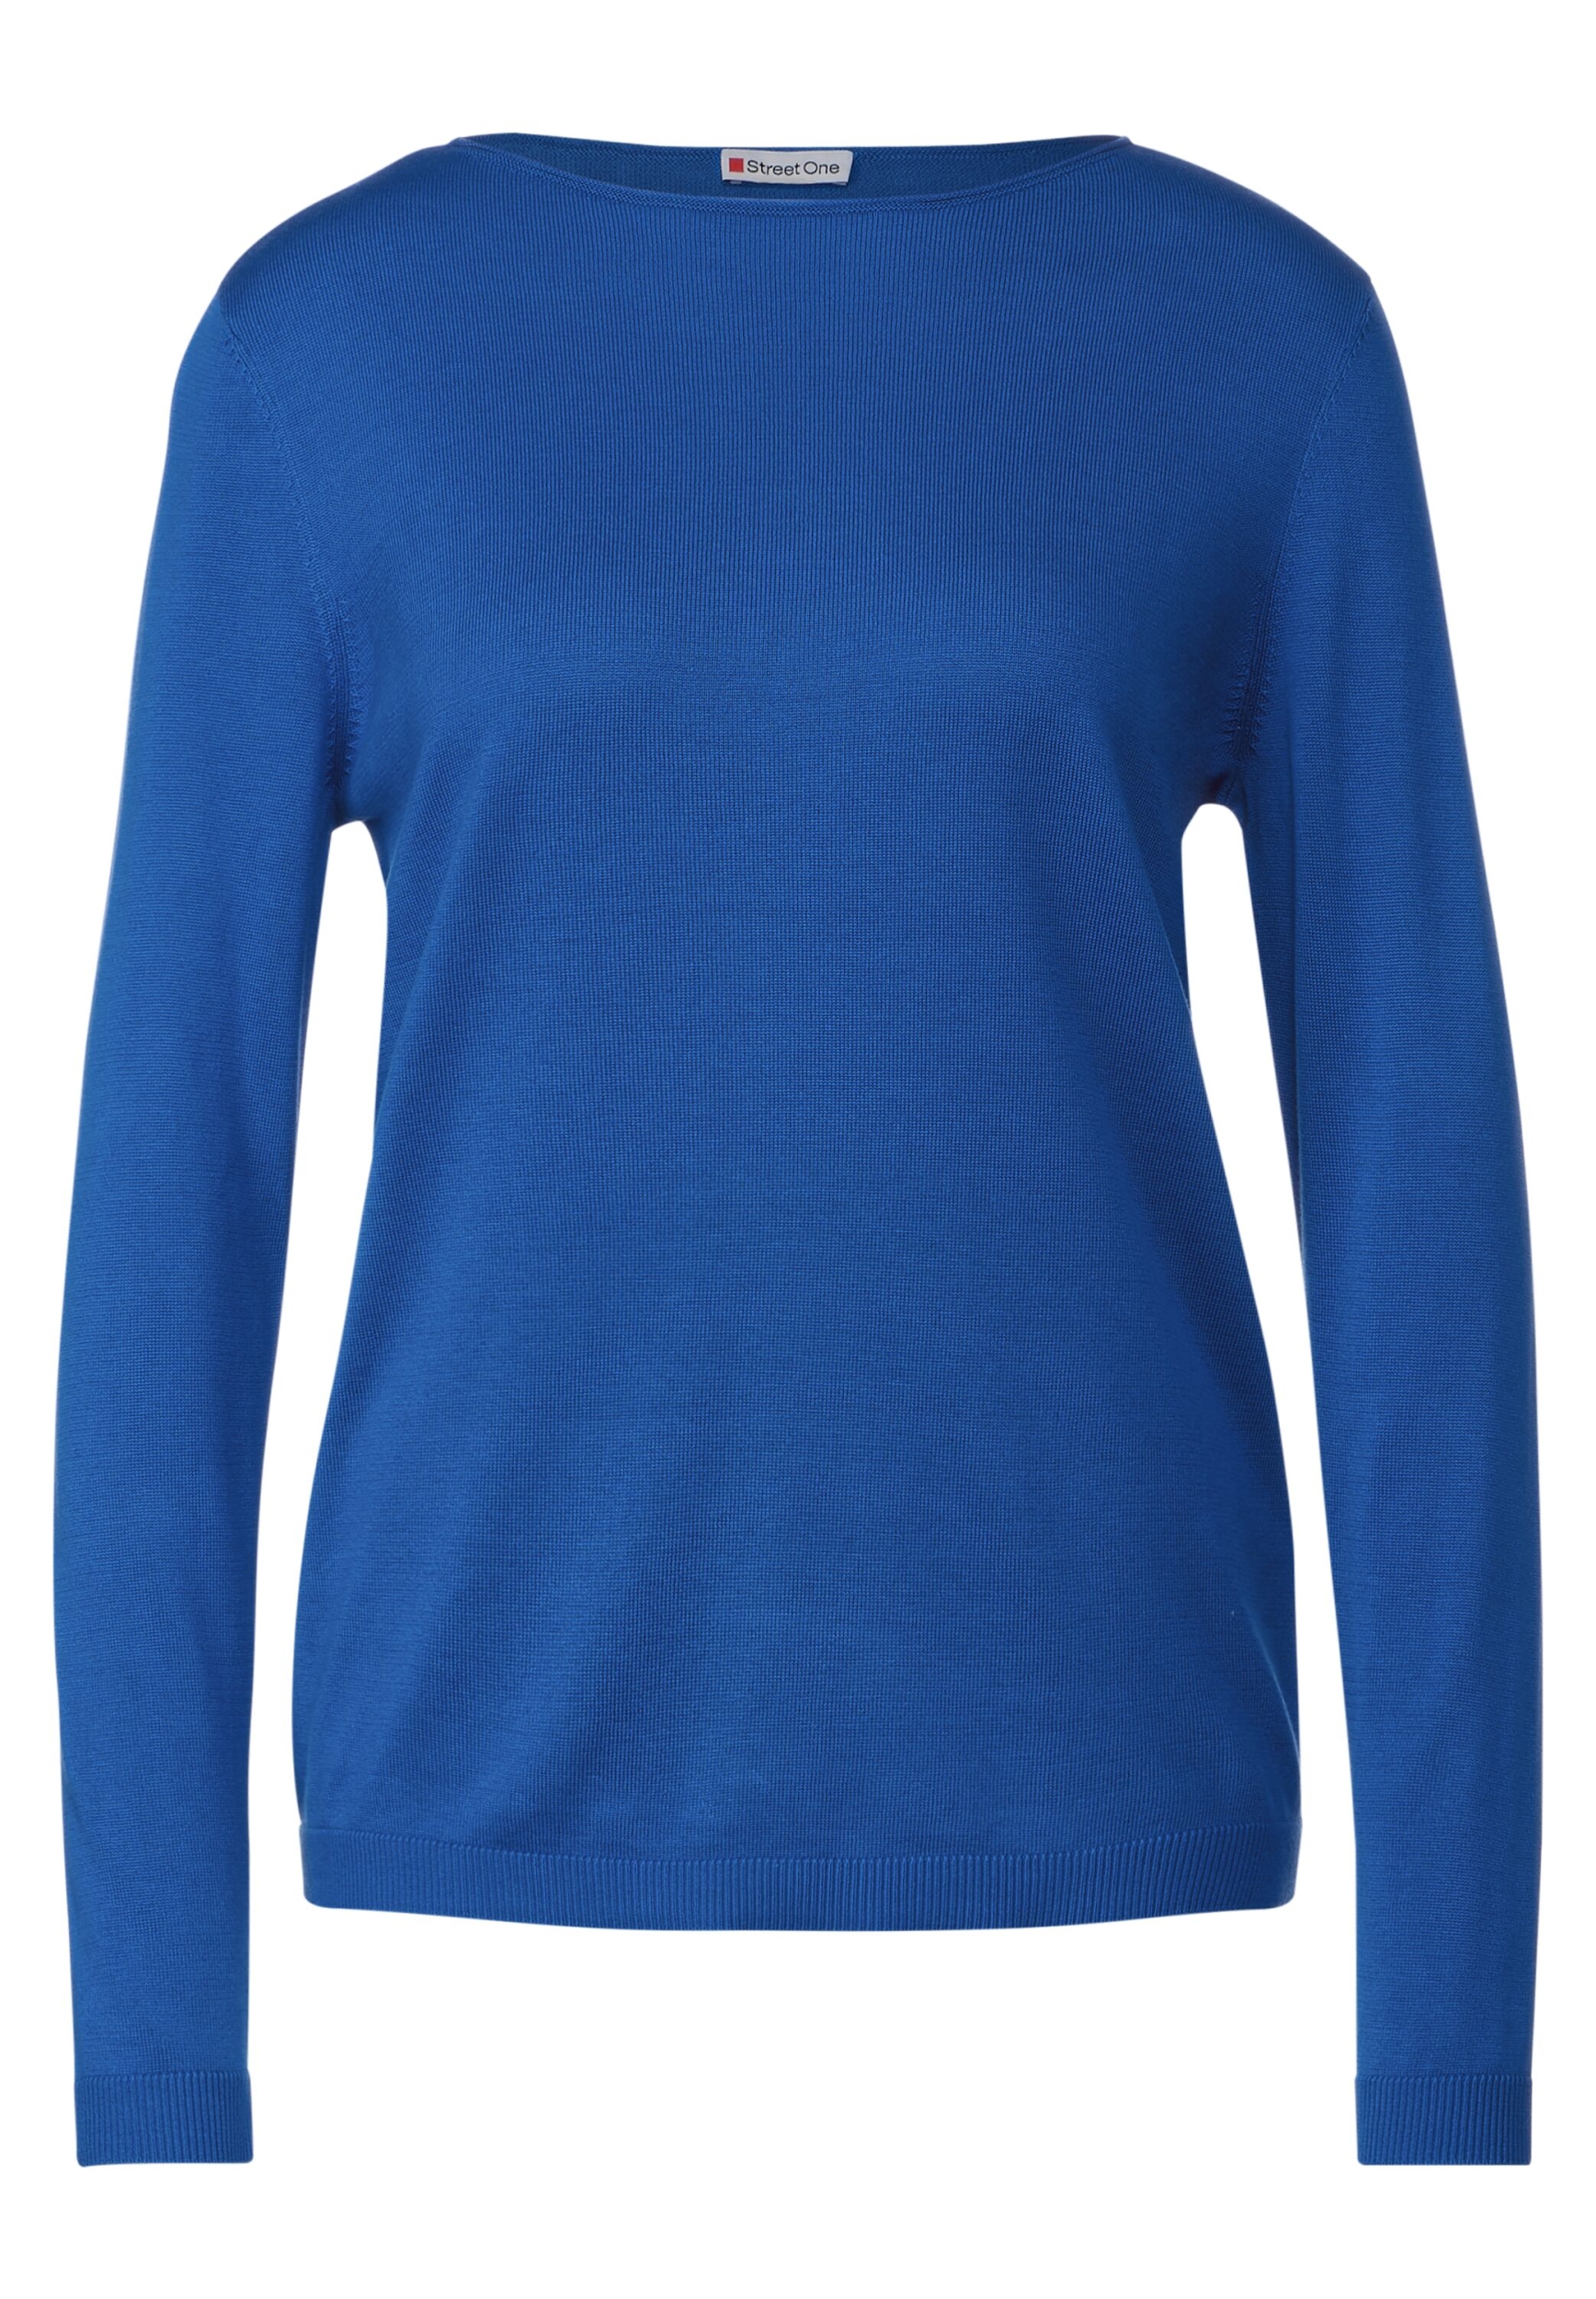 LTD QR basic | intense | fresh u-boat gentle sweater | A302548-15377-34 34 blue